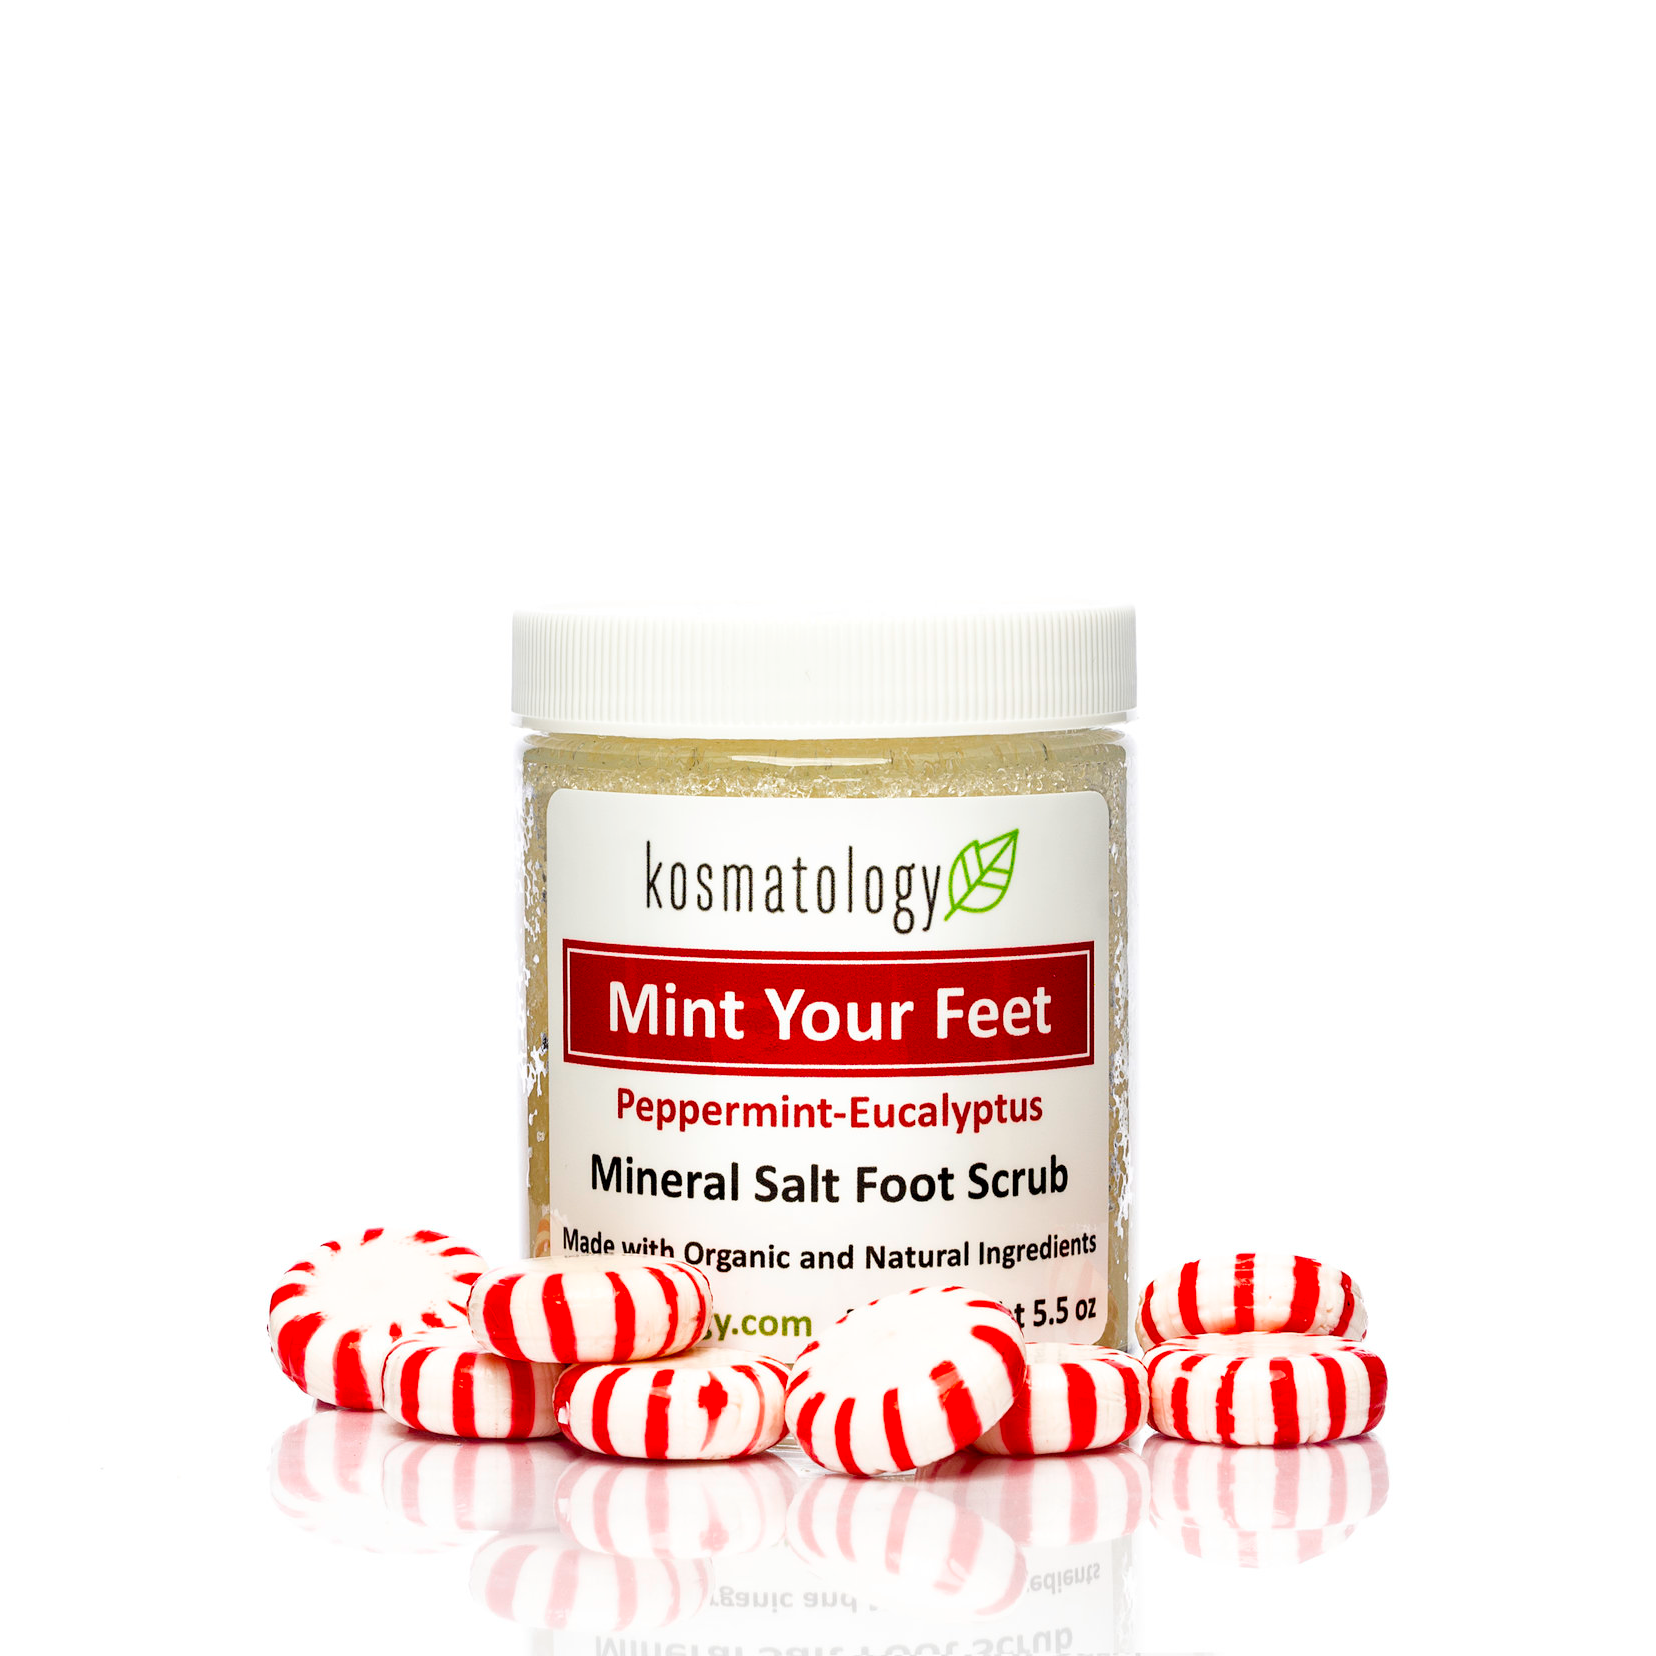 Kosmatology Mint Your Feet Mineral Salt Foot Scrub MADE SAFE